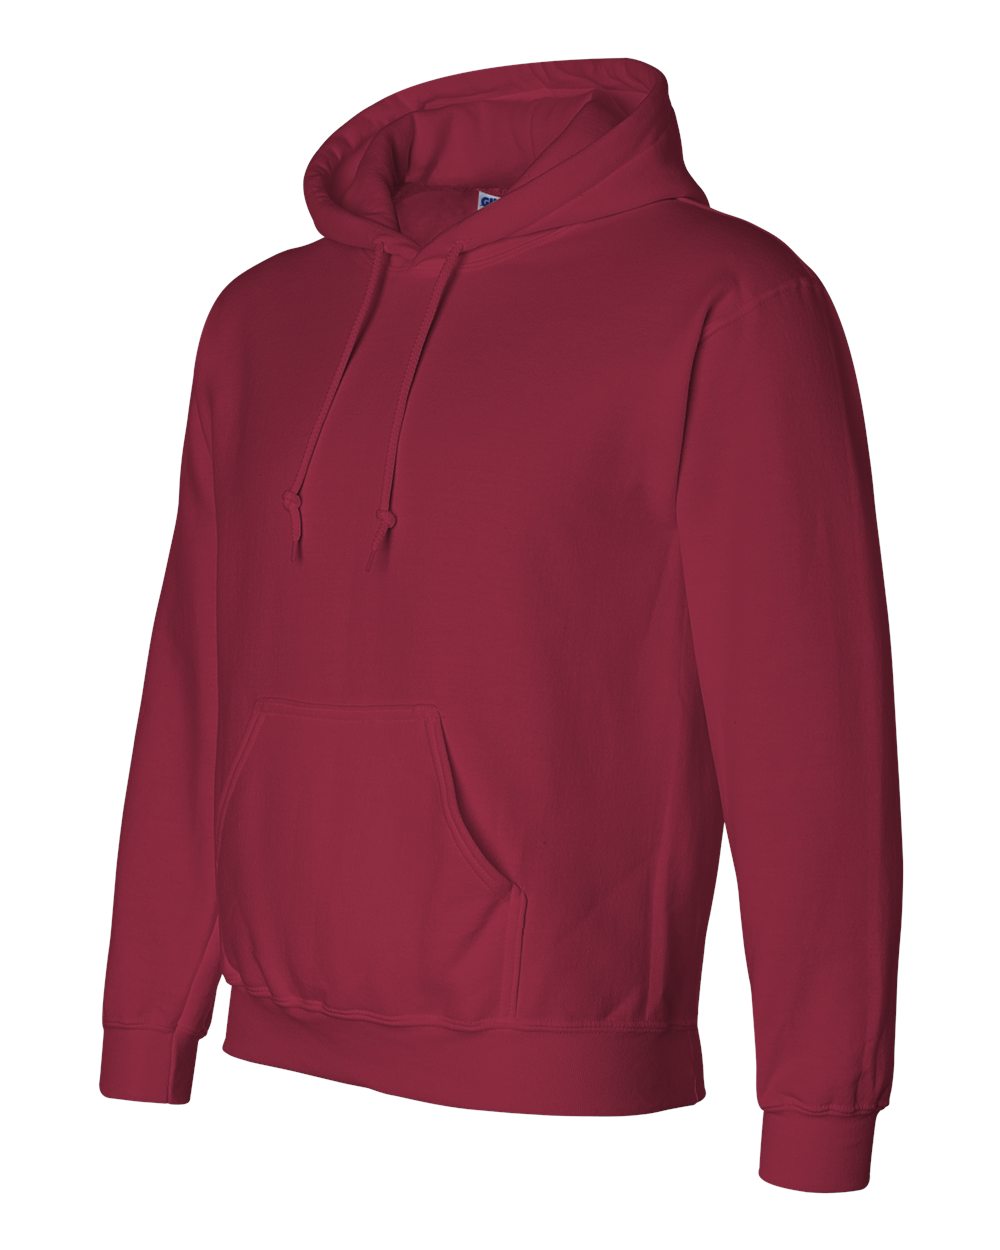 Gildan Ultra Blend Hooded sweater GIL12500 Cardinal Red